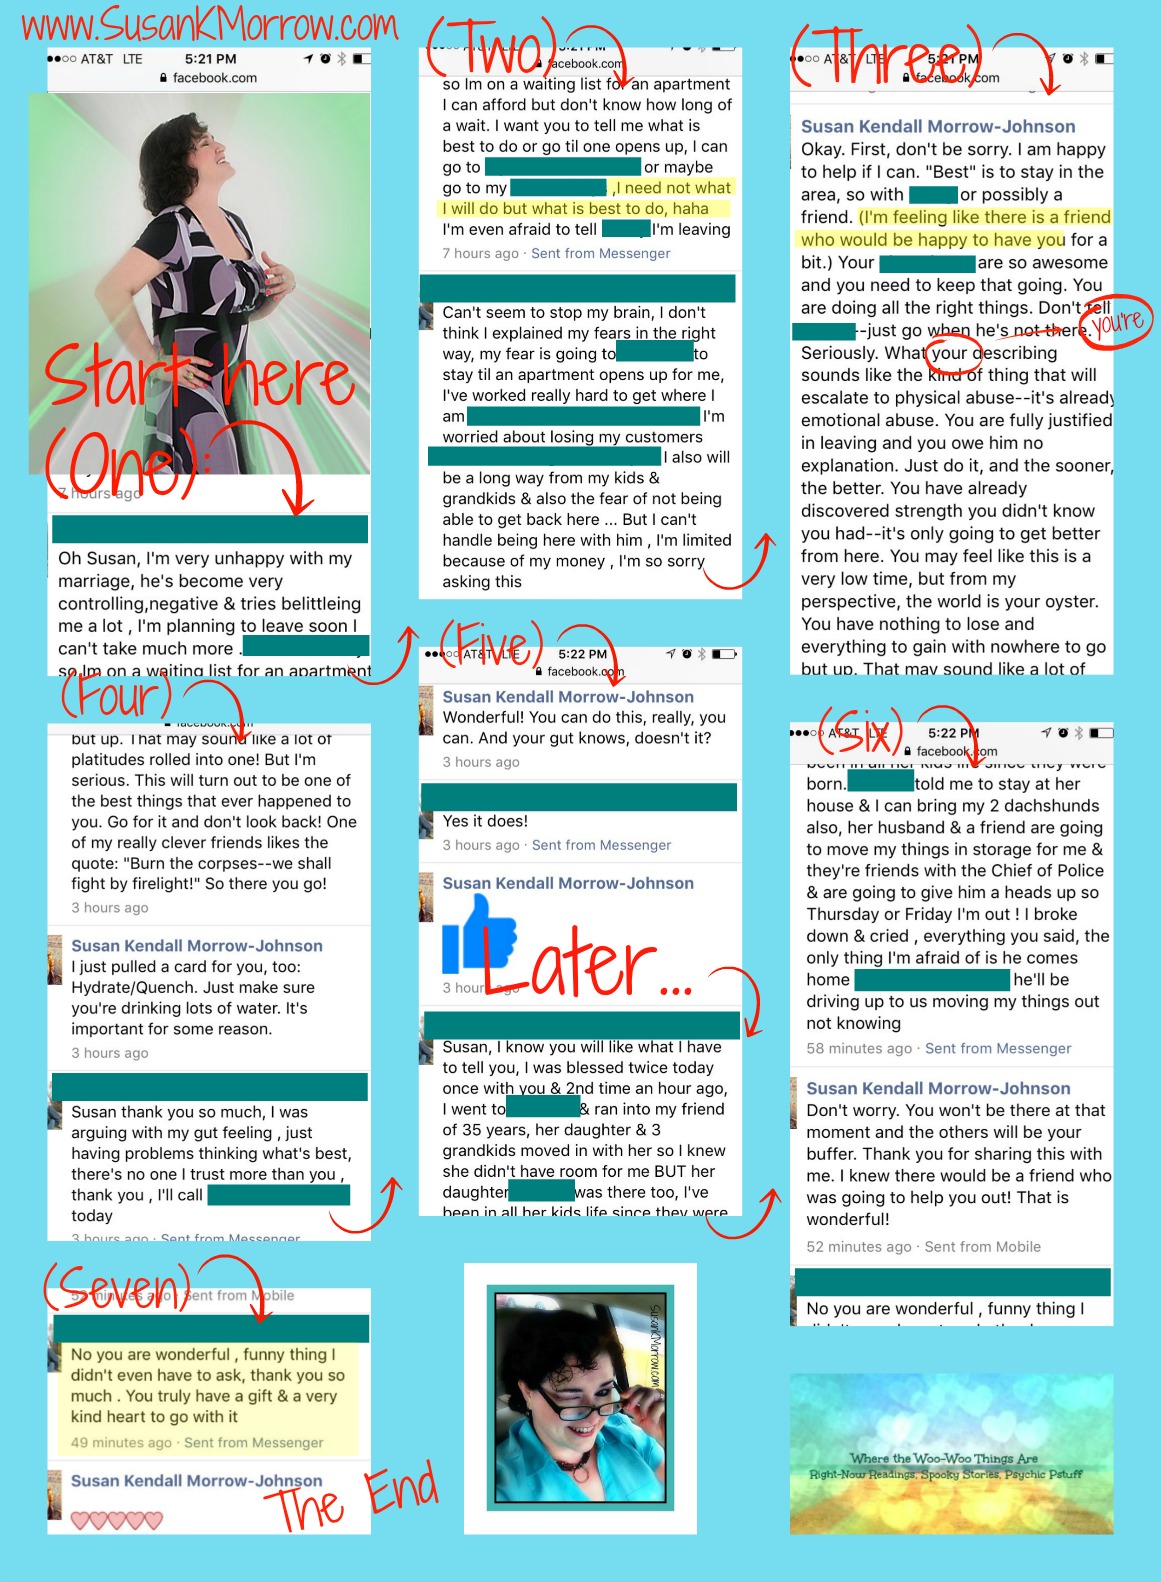 donna-facebook-reading-collage-10-11-16-sm